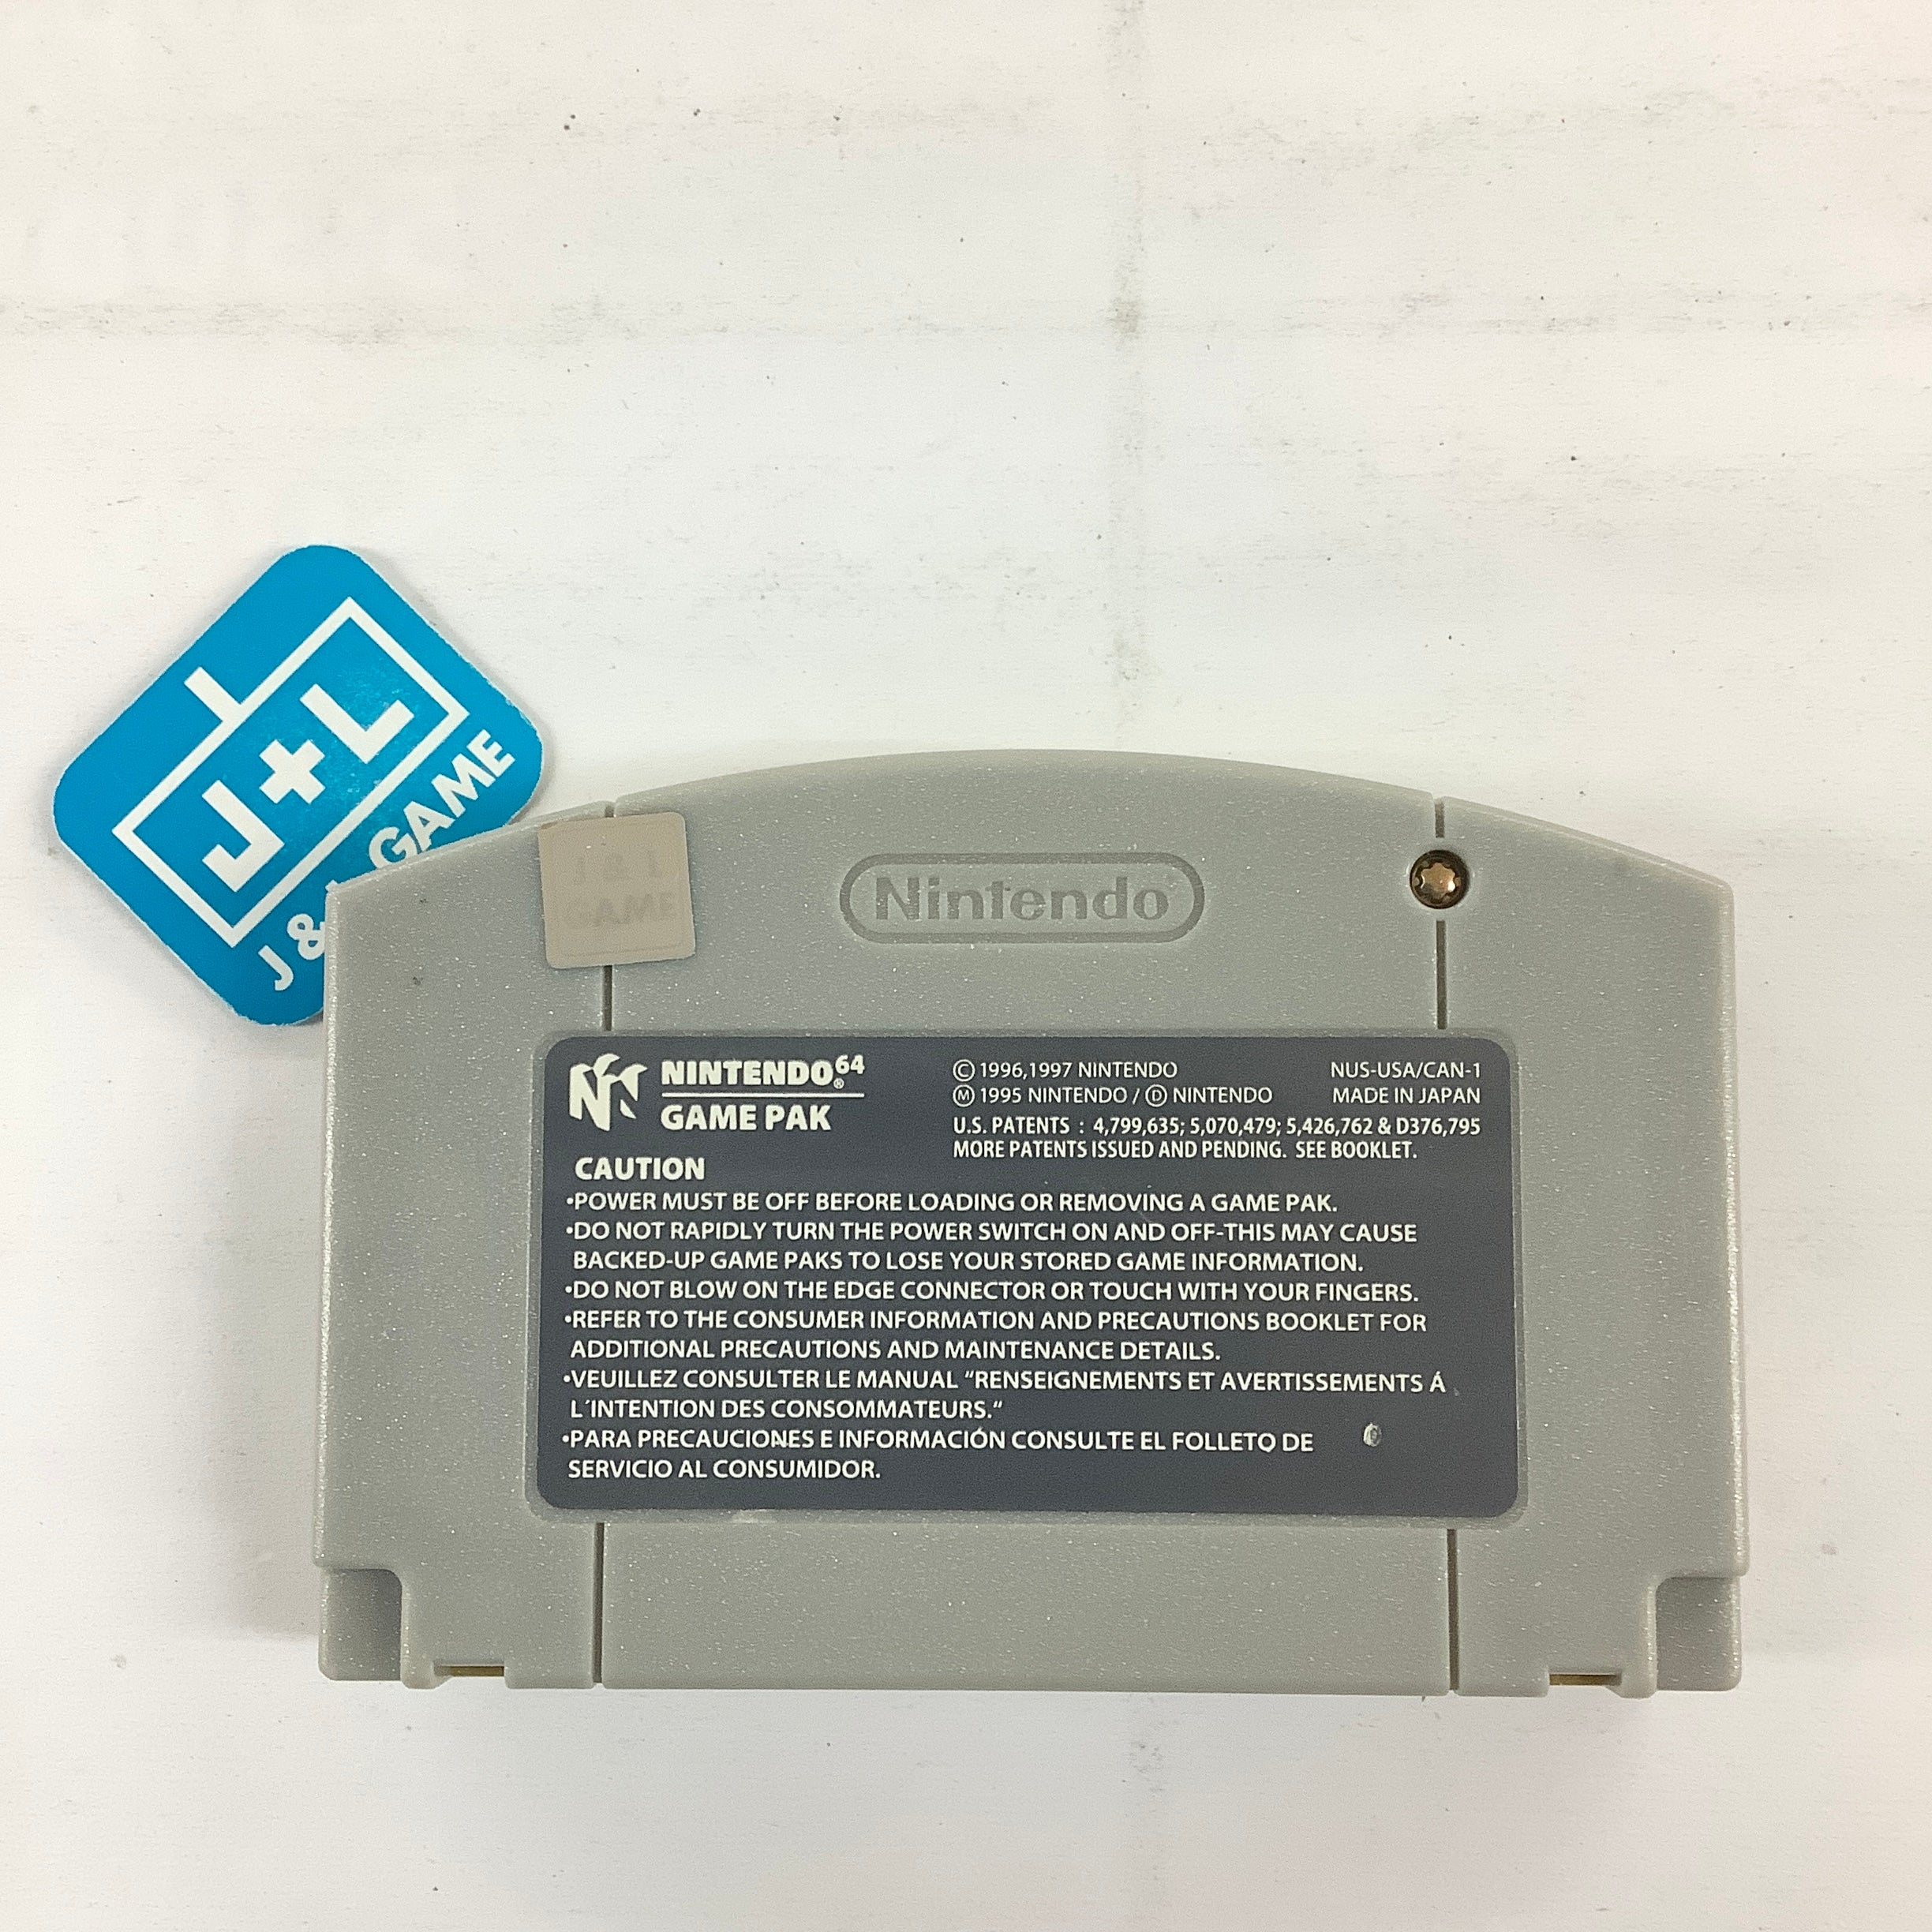 Pokemon Stadium 2 - (N64) Nintendo 64 [Pre-Owned] Video Games Nintendo   